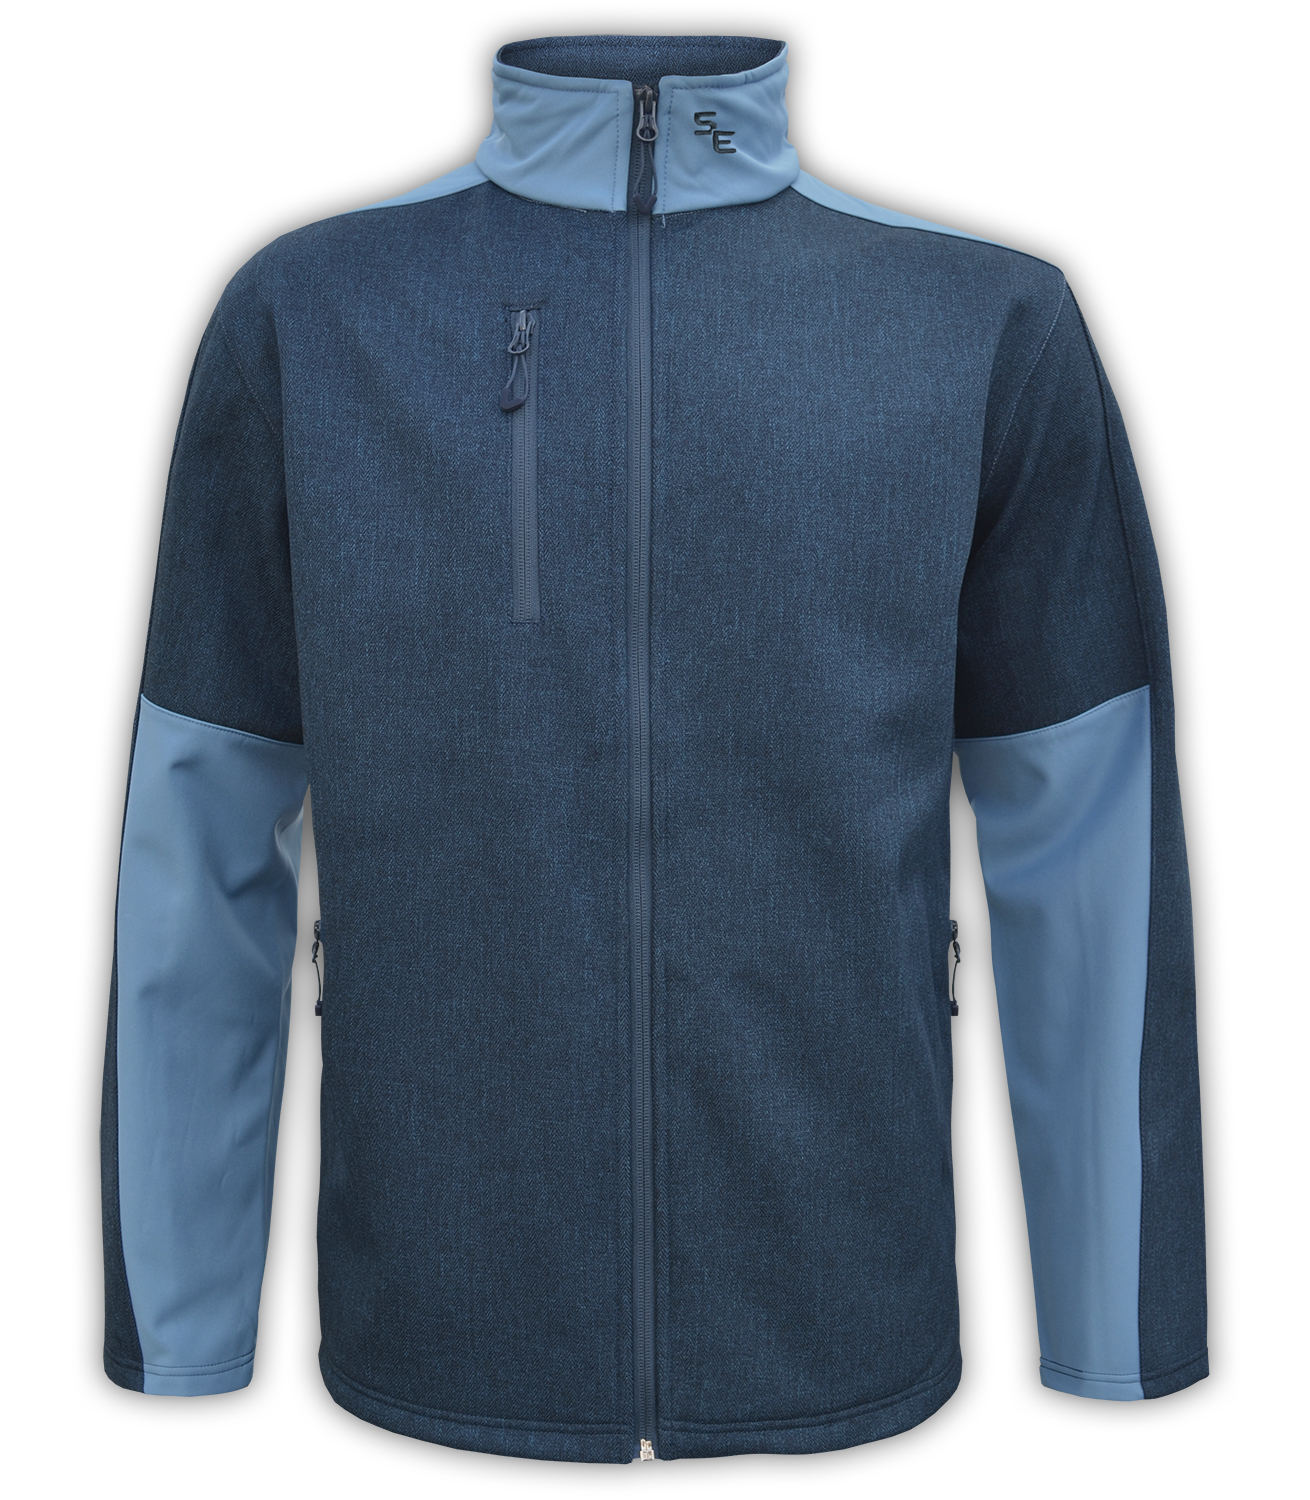 summit-edge-outdoor-clothing-brand-jacket-fleece-zip-up-woven-blue-denim-zipper-pockets-stand-up-collar-front